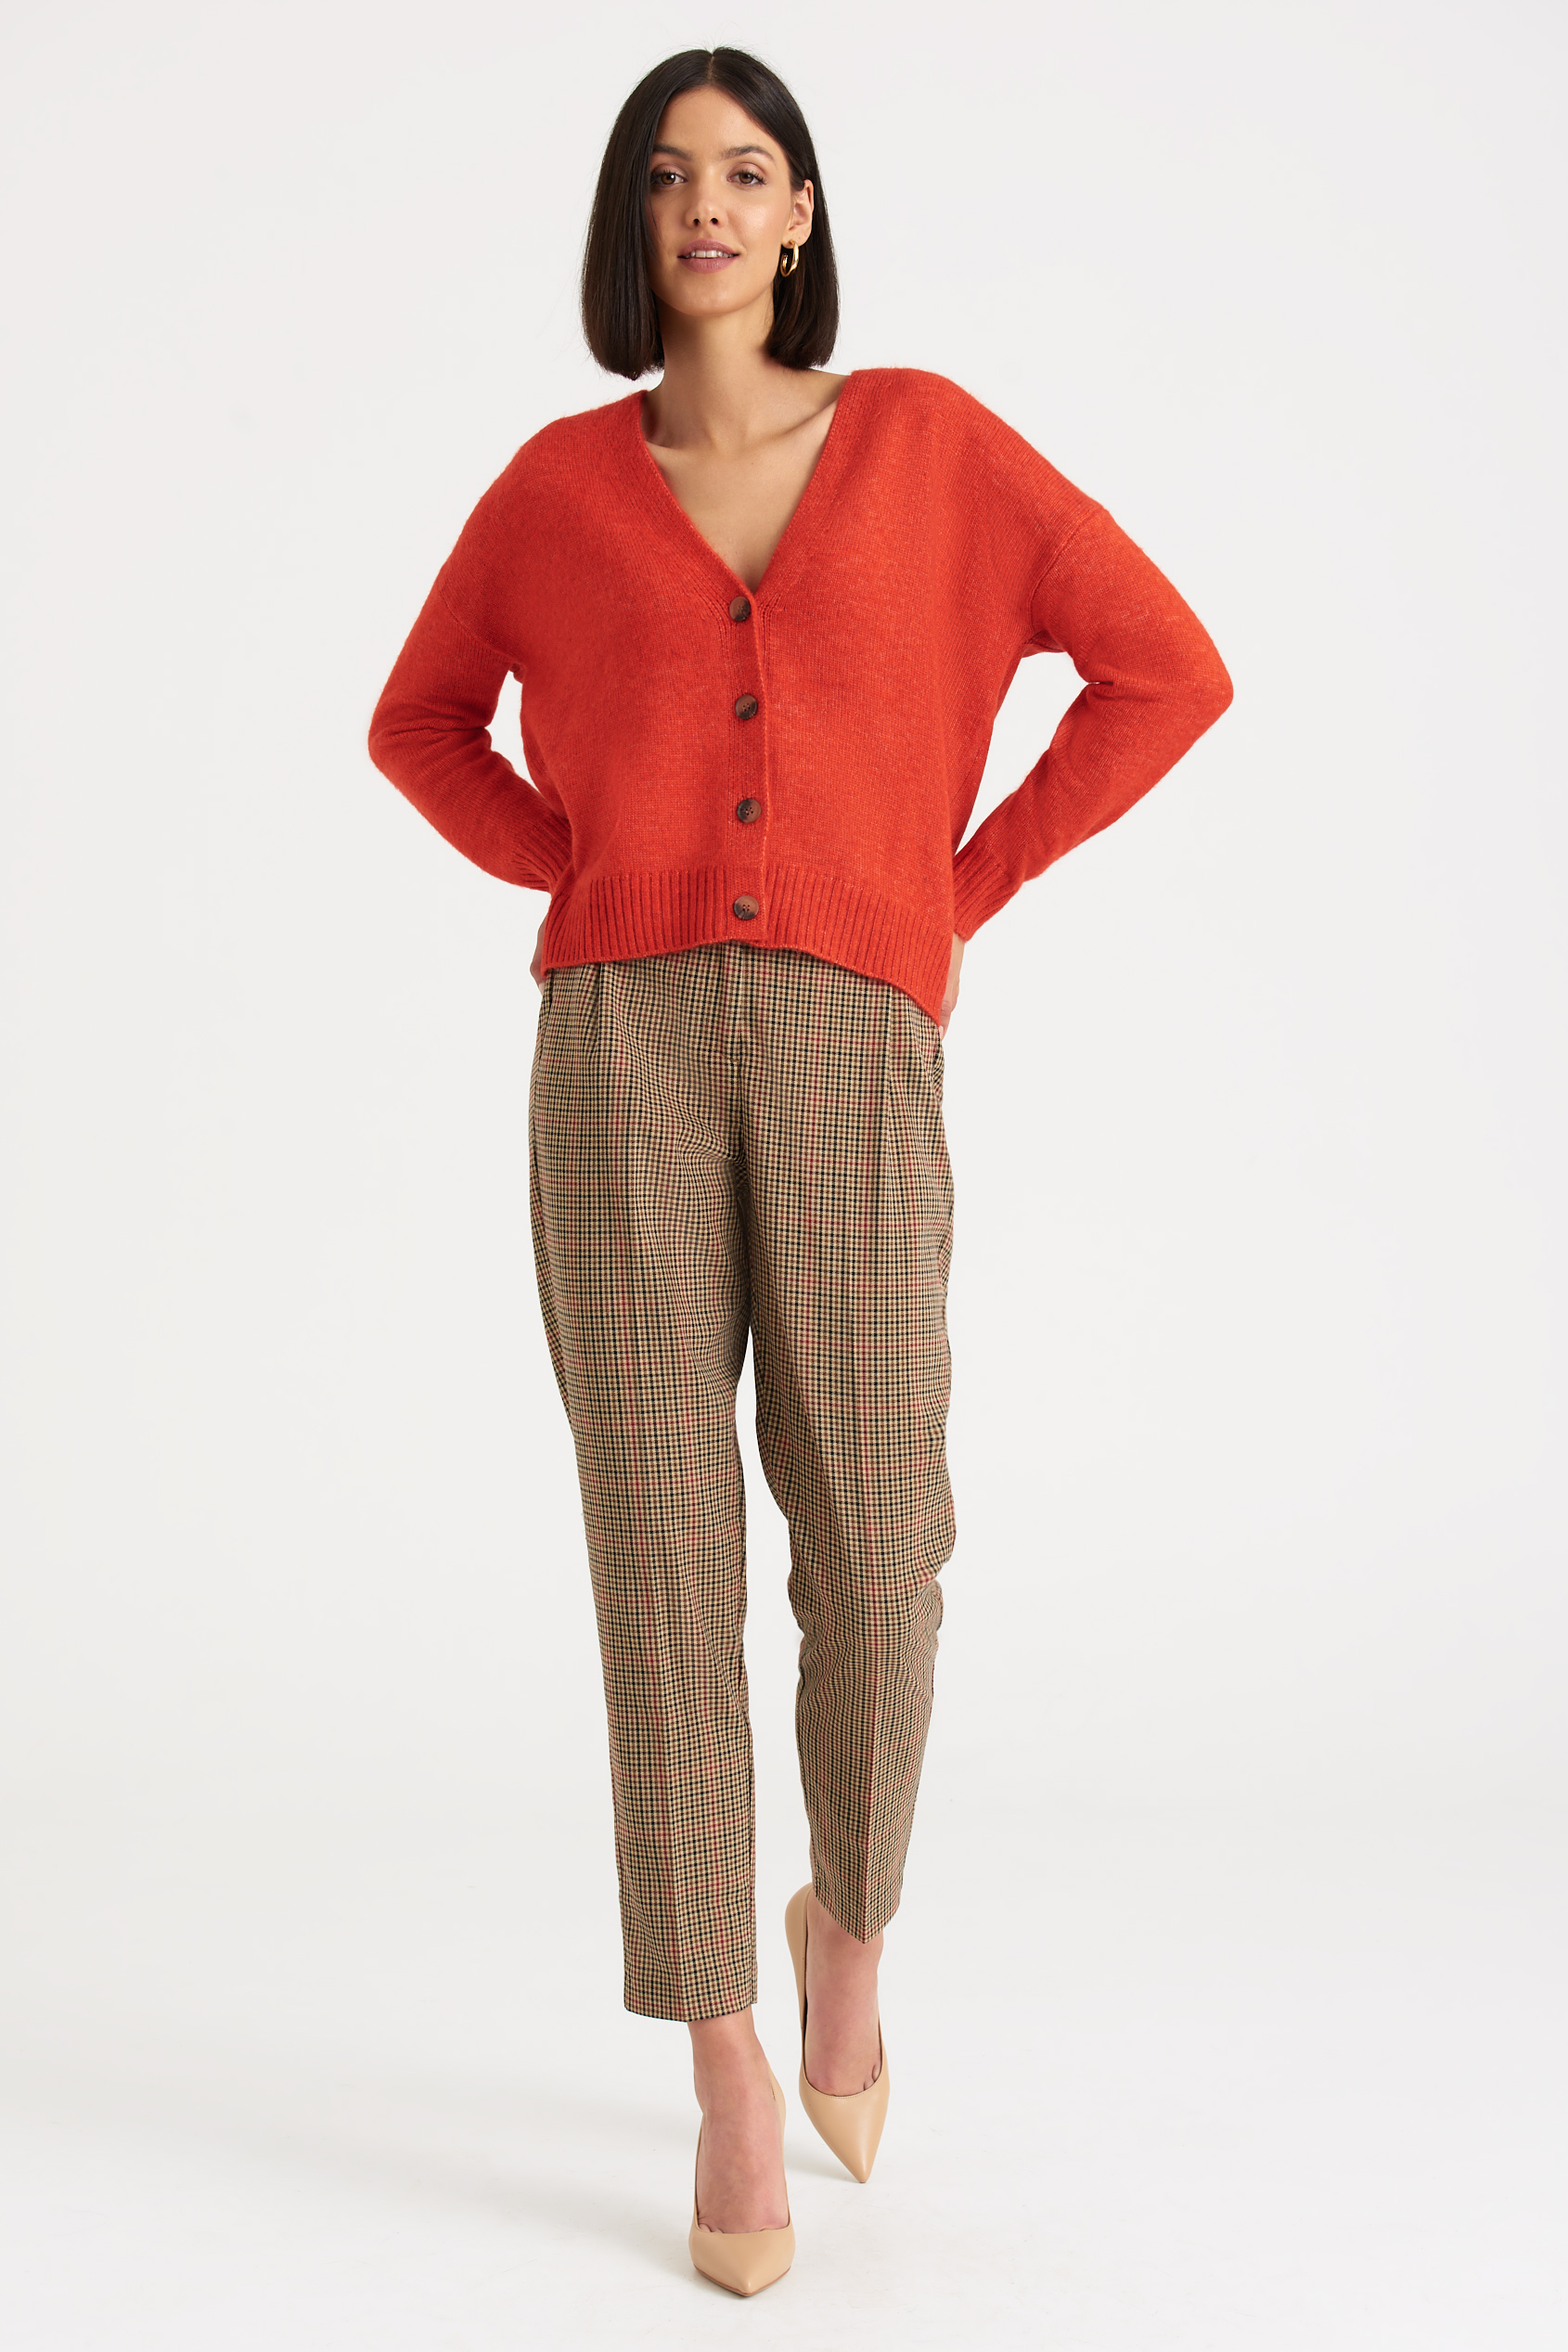 Greenpoint Woman's Trousers SPO407W22CHE01